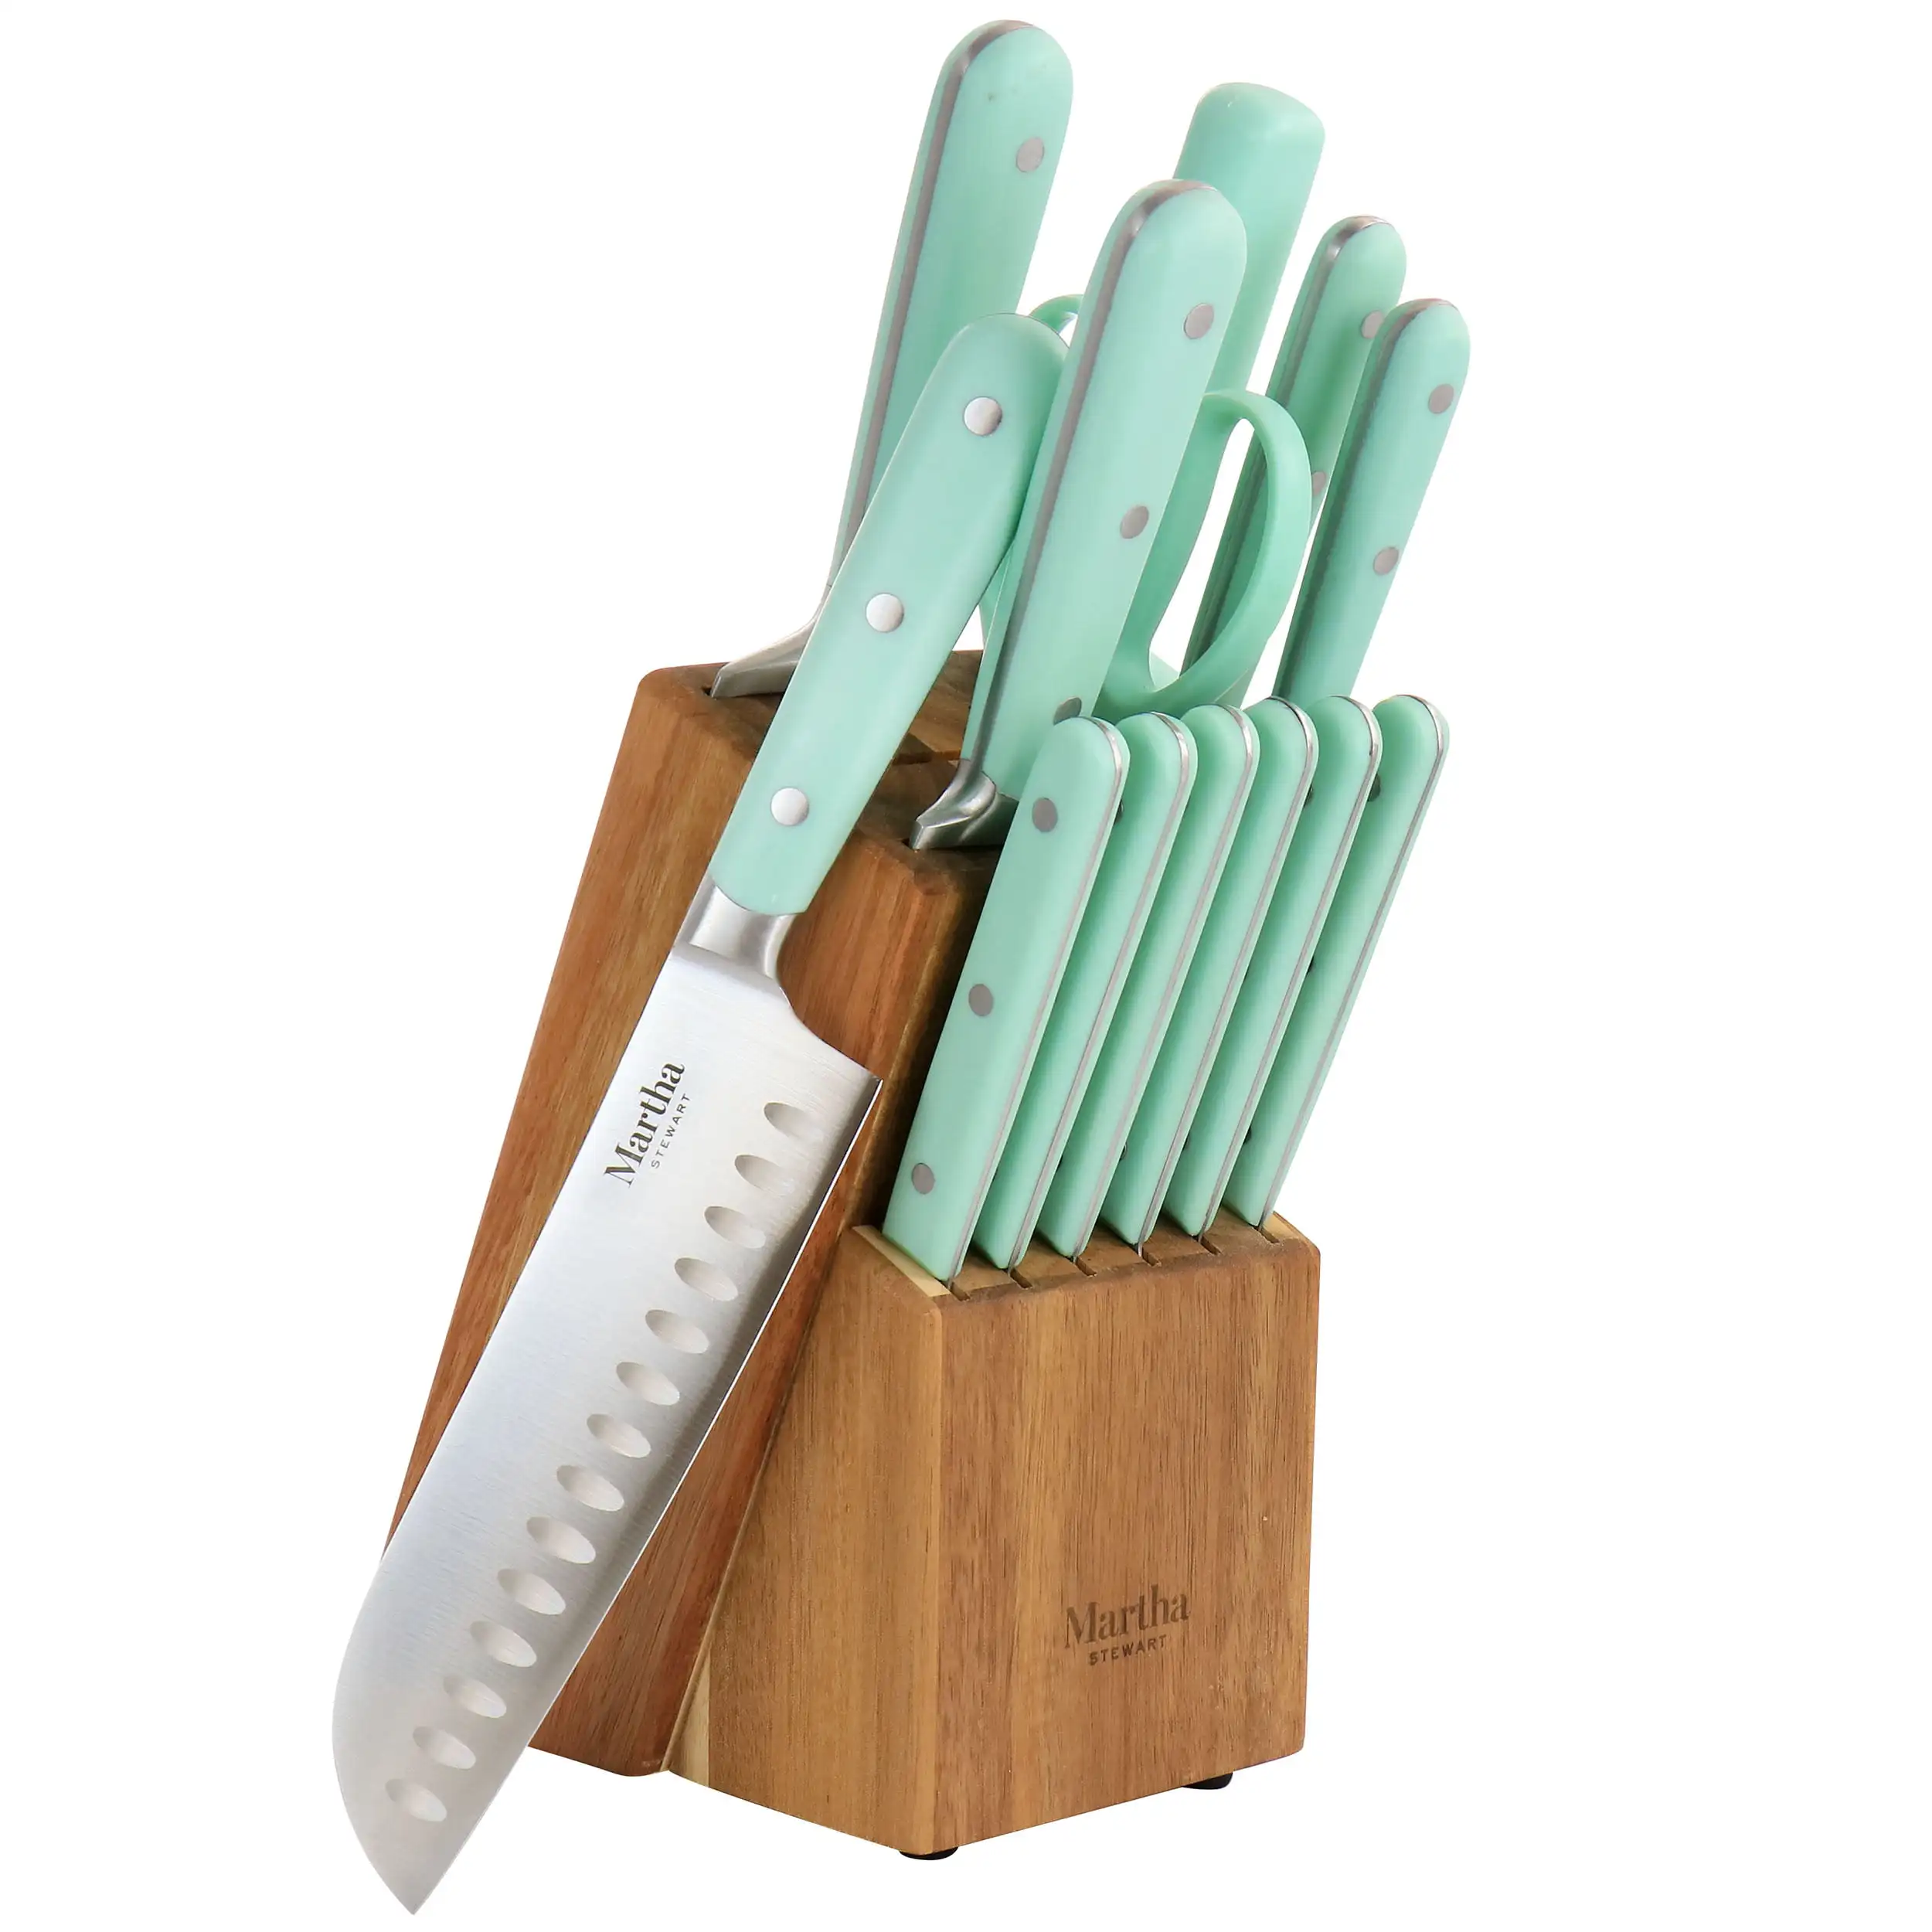 

Martha Stewart Everyday East Walk 14-Piece Blue Stainless Steel Cutlery Setkitchen knives set , Knife holder